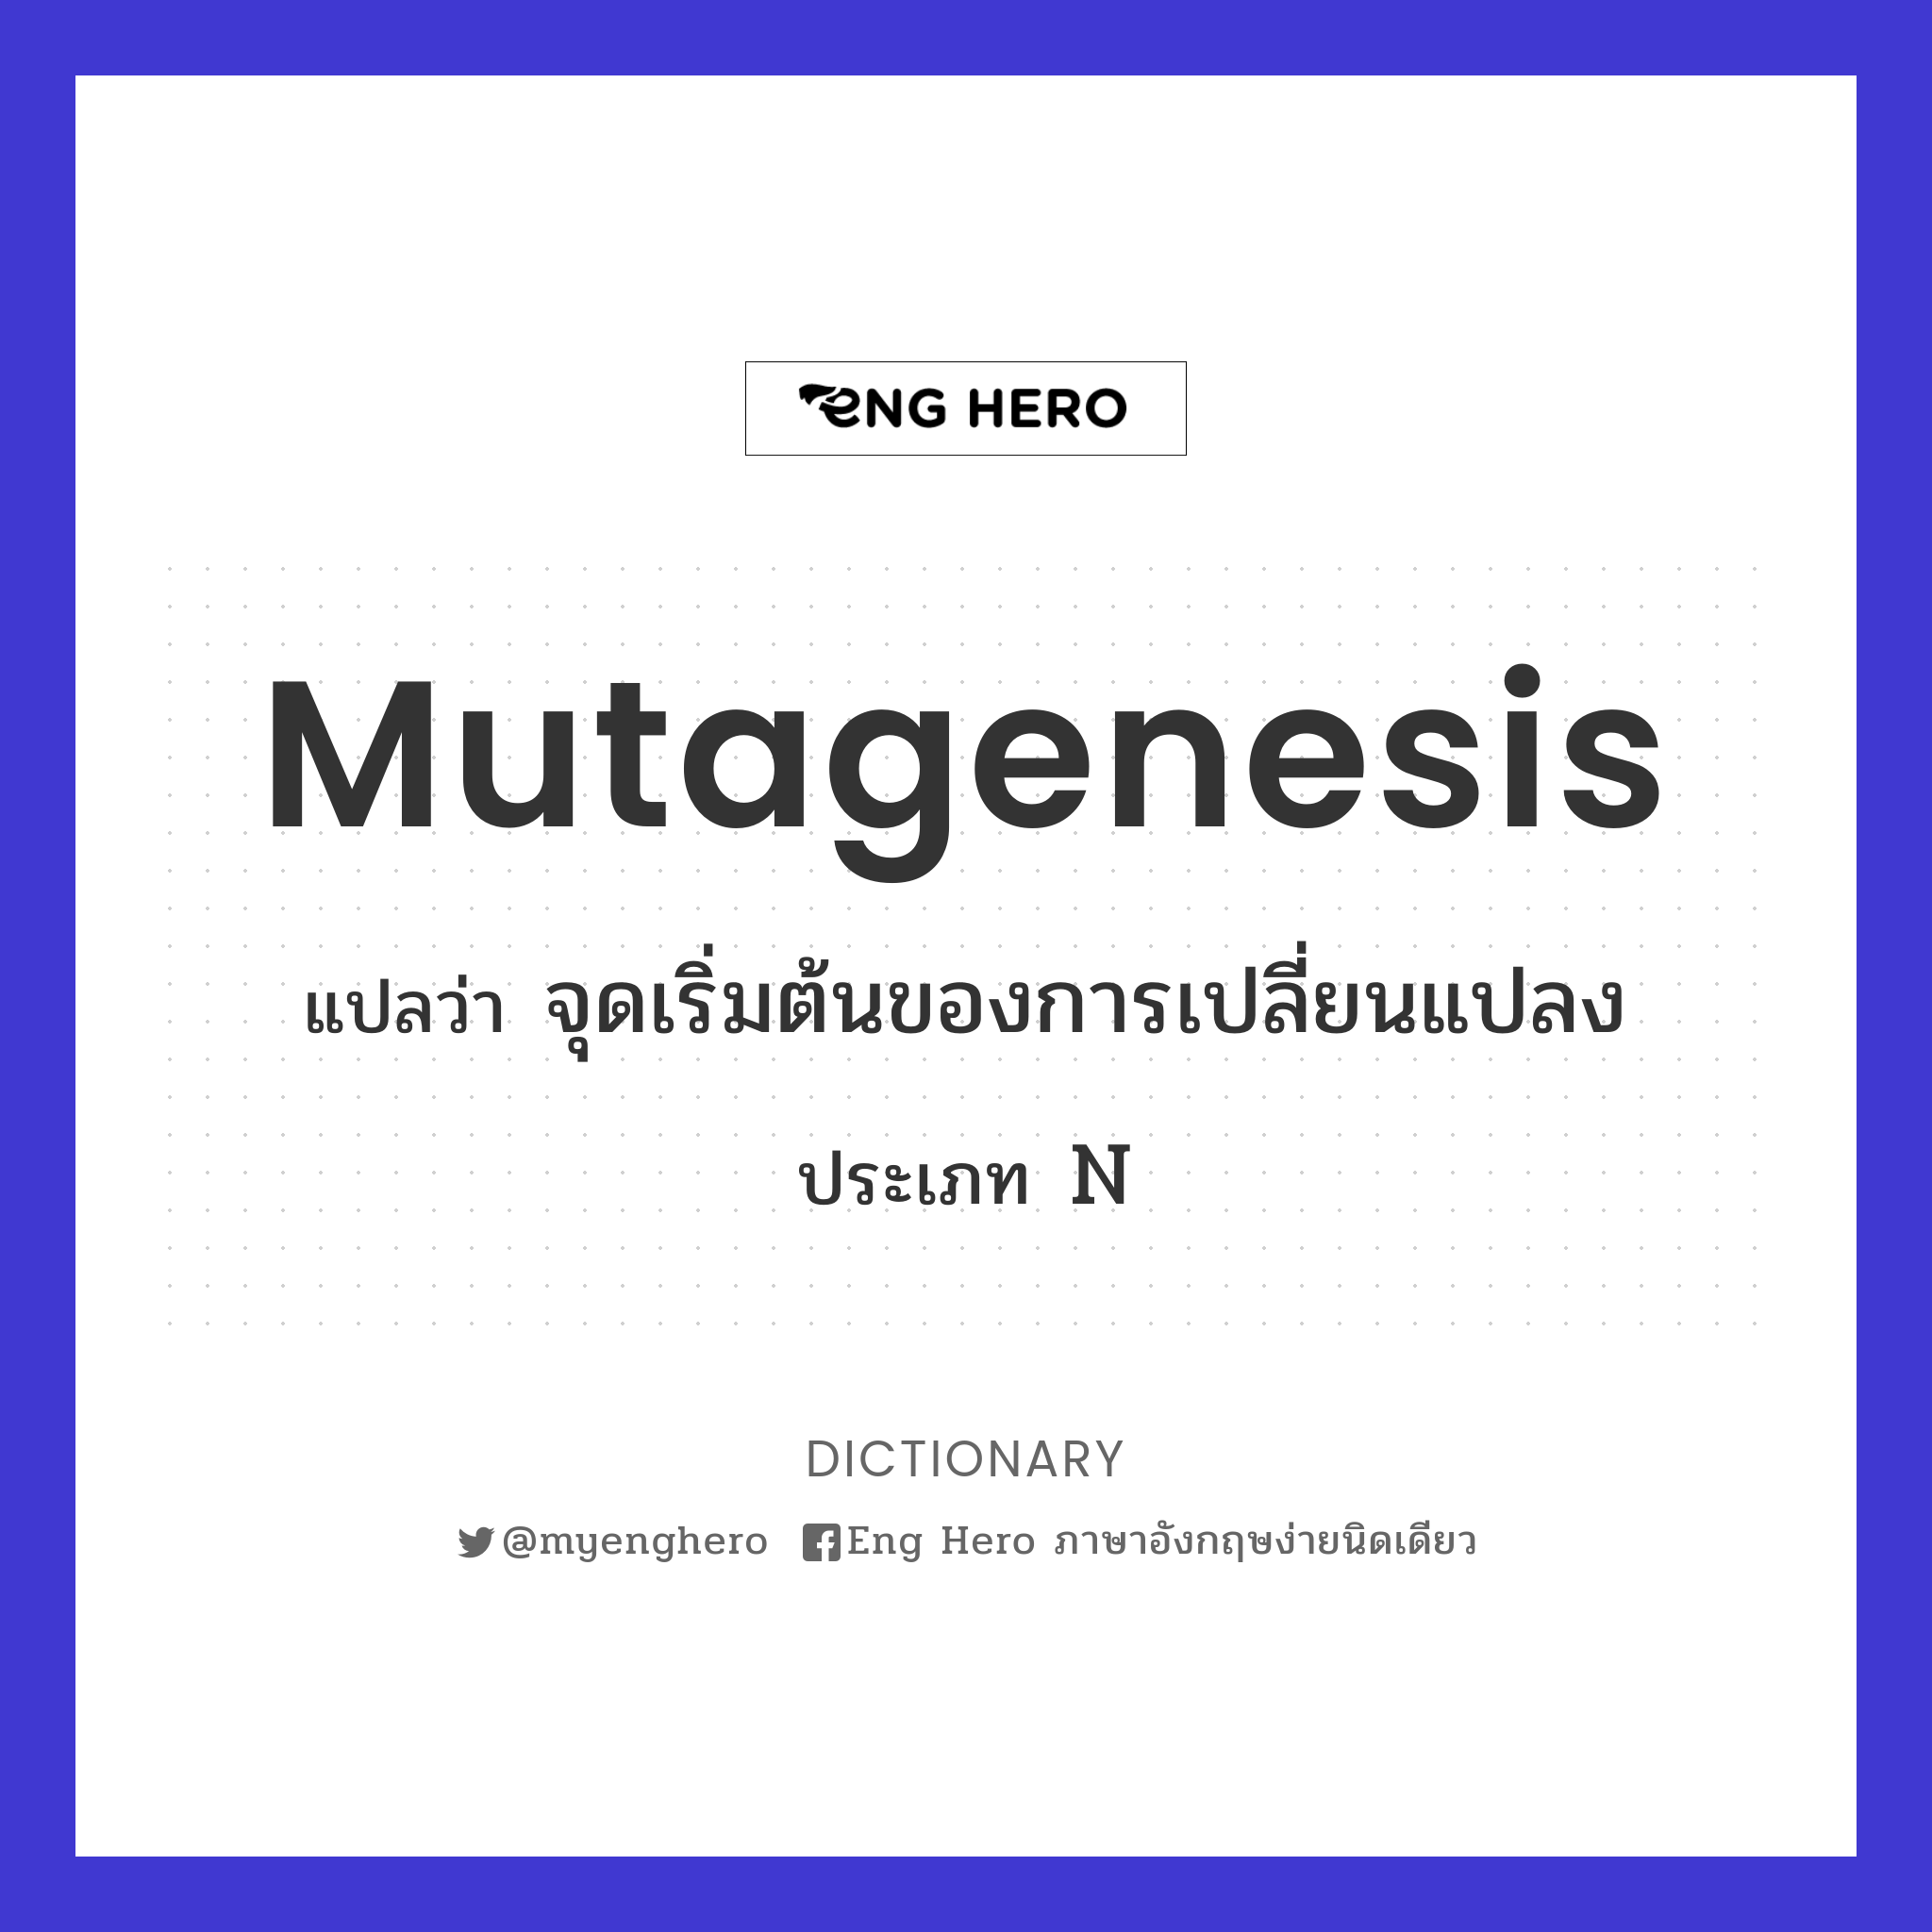 mutagenesis